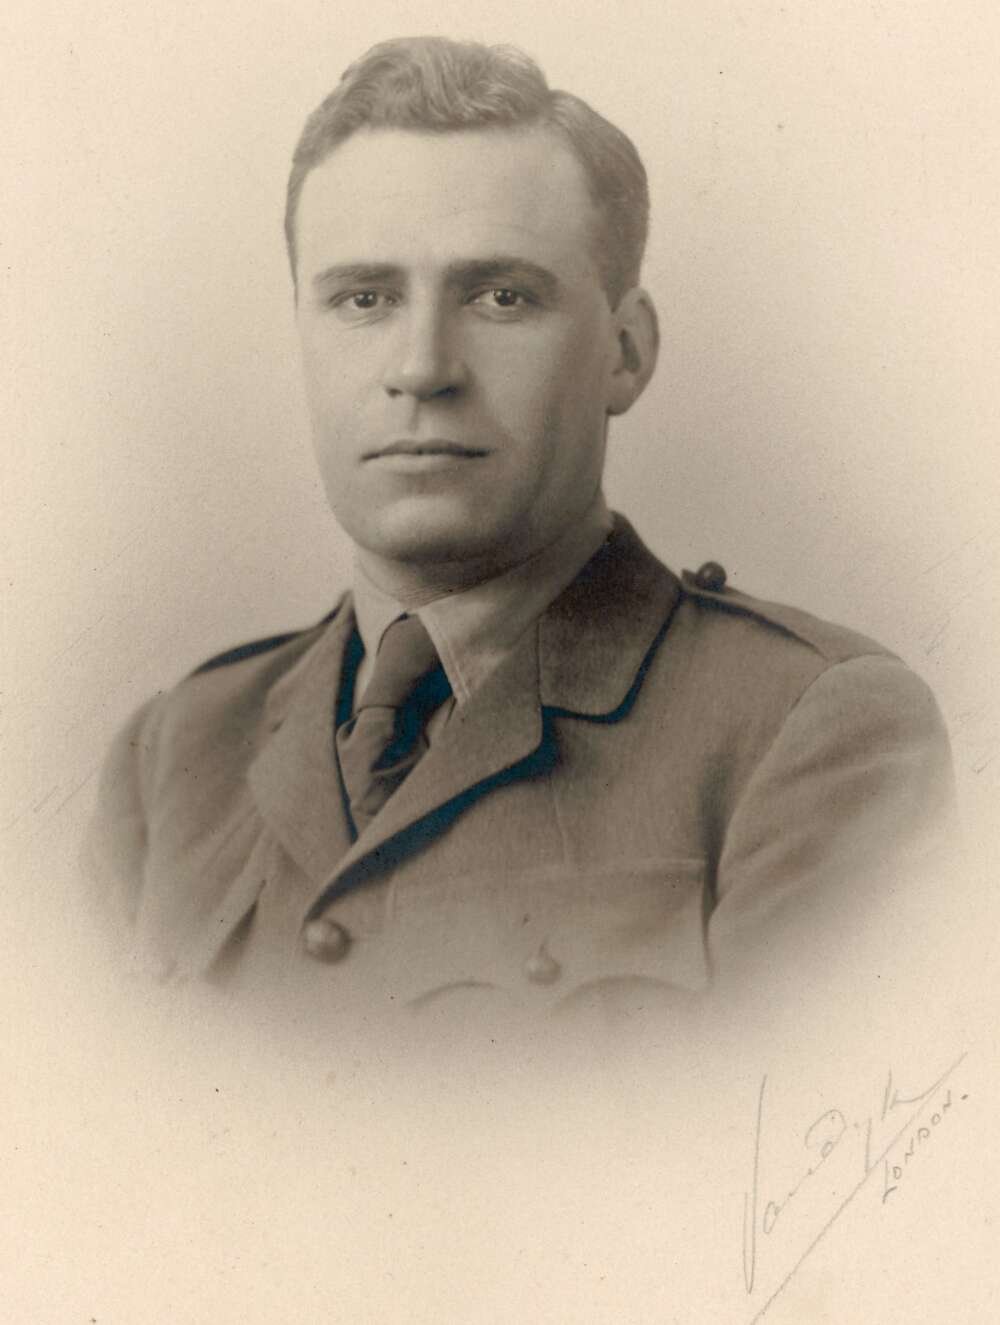 Portrait of journalist Keith Murdoch in uniform